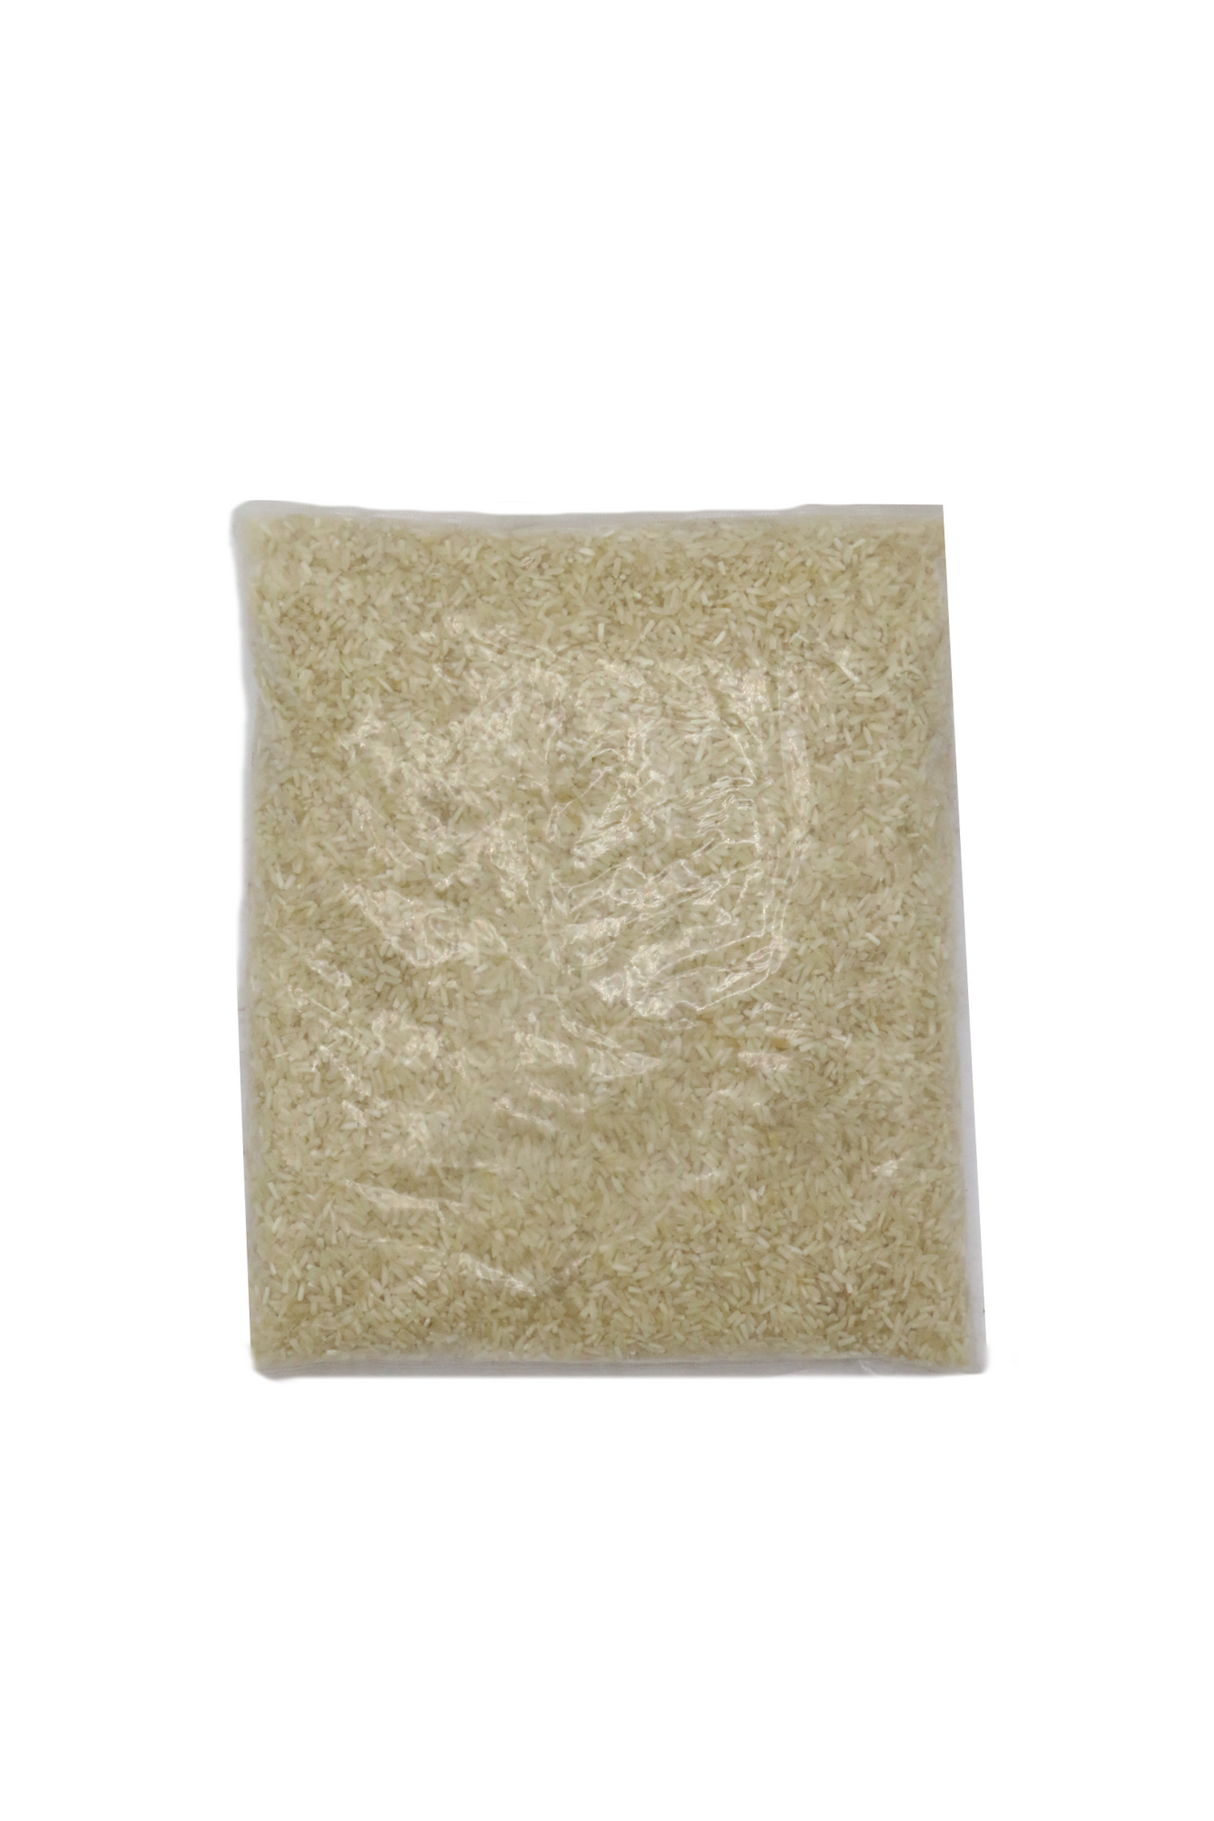 hello bizz  rice short grain 1kg